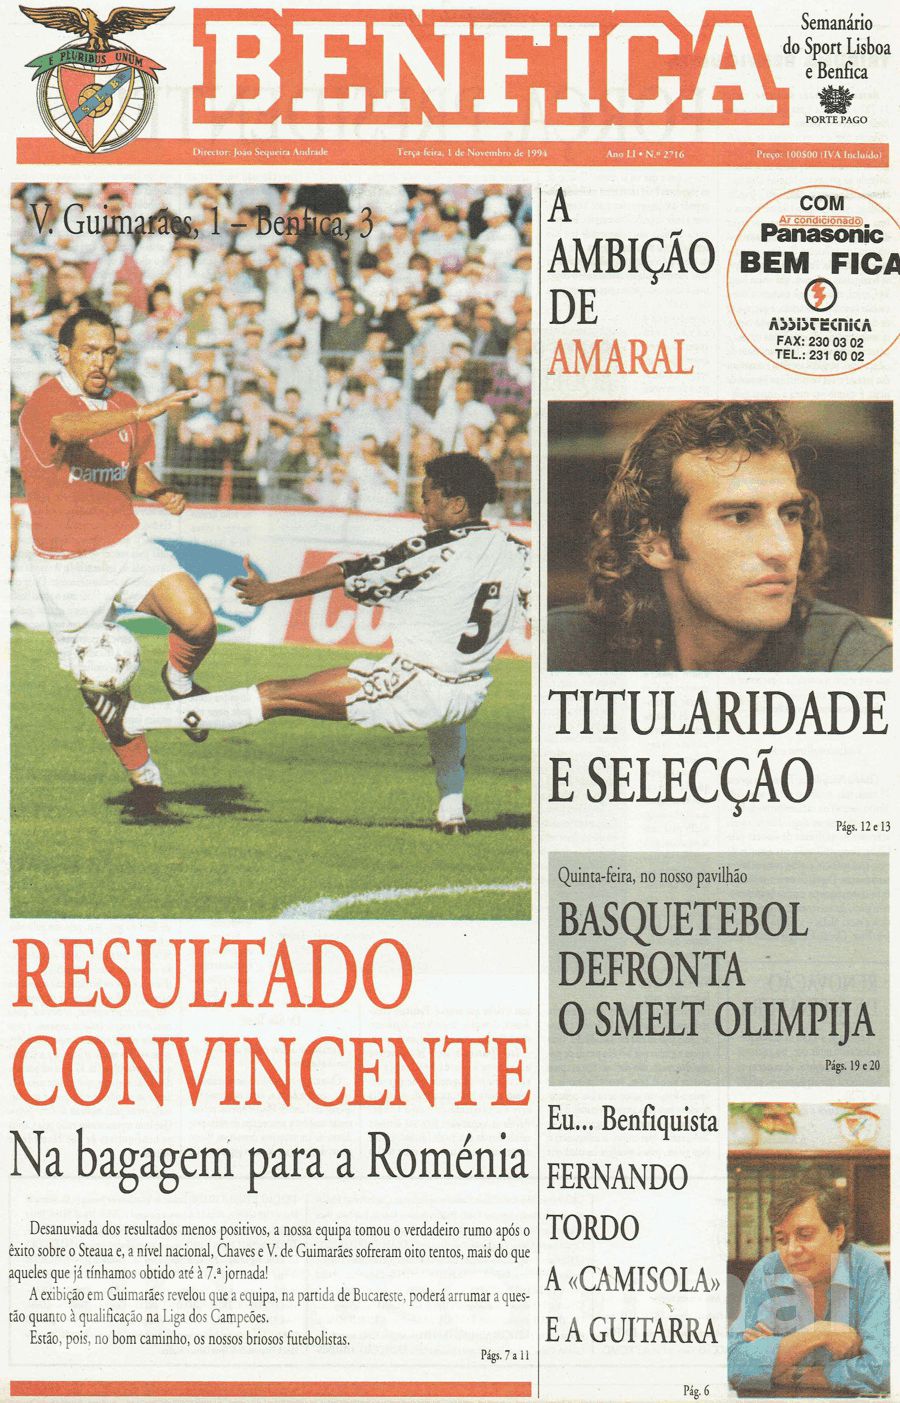 jornal o benfica 2716 1994-11-01